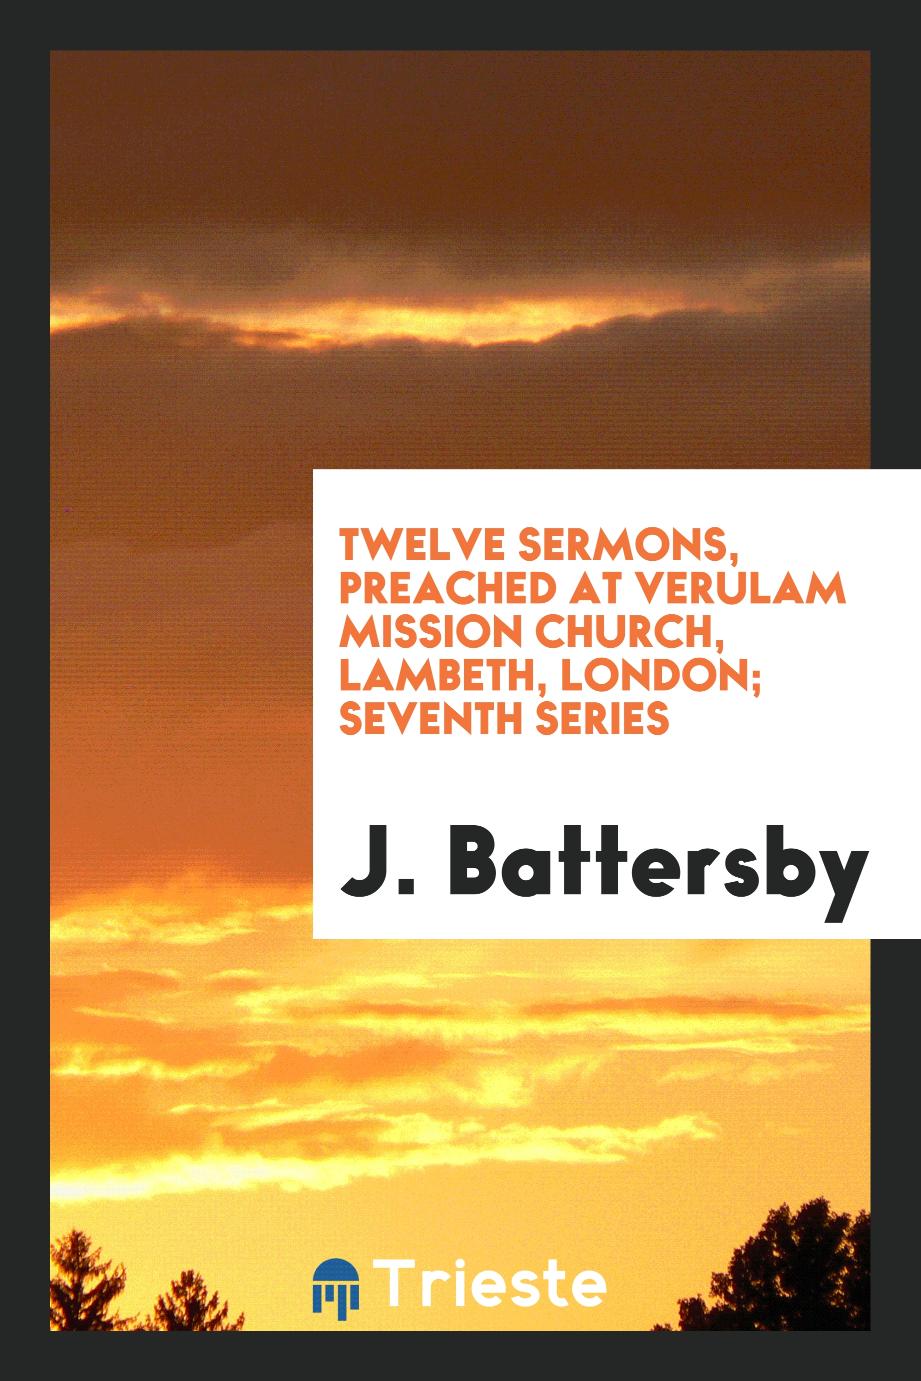 Twelve Sermons, preached at verulam mission church, lambeth, London; seventh series